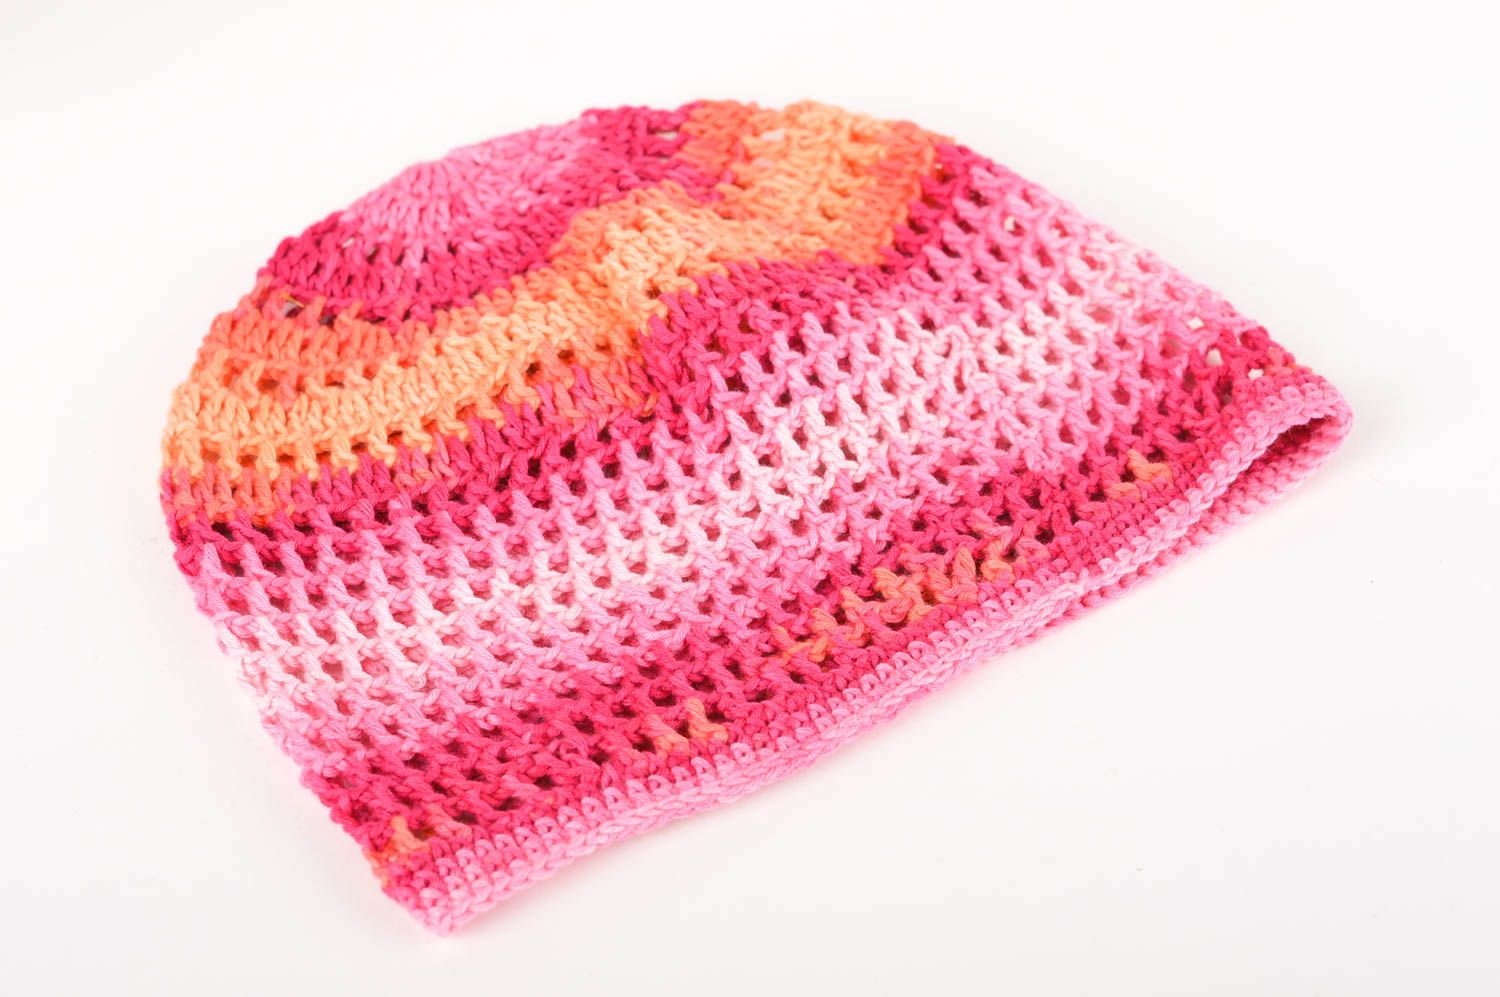 Crochet hat for babies handmade crochet hat kids accessories gifts for children photo 2